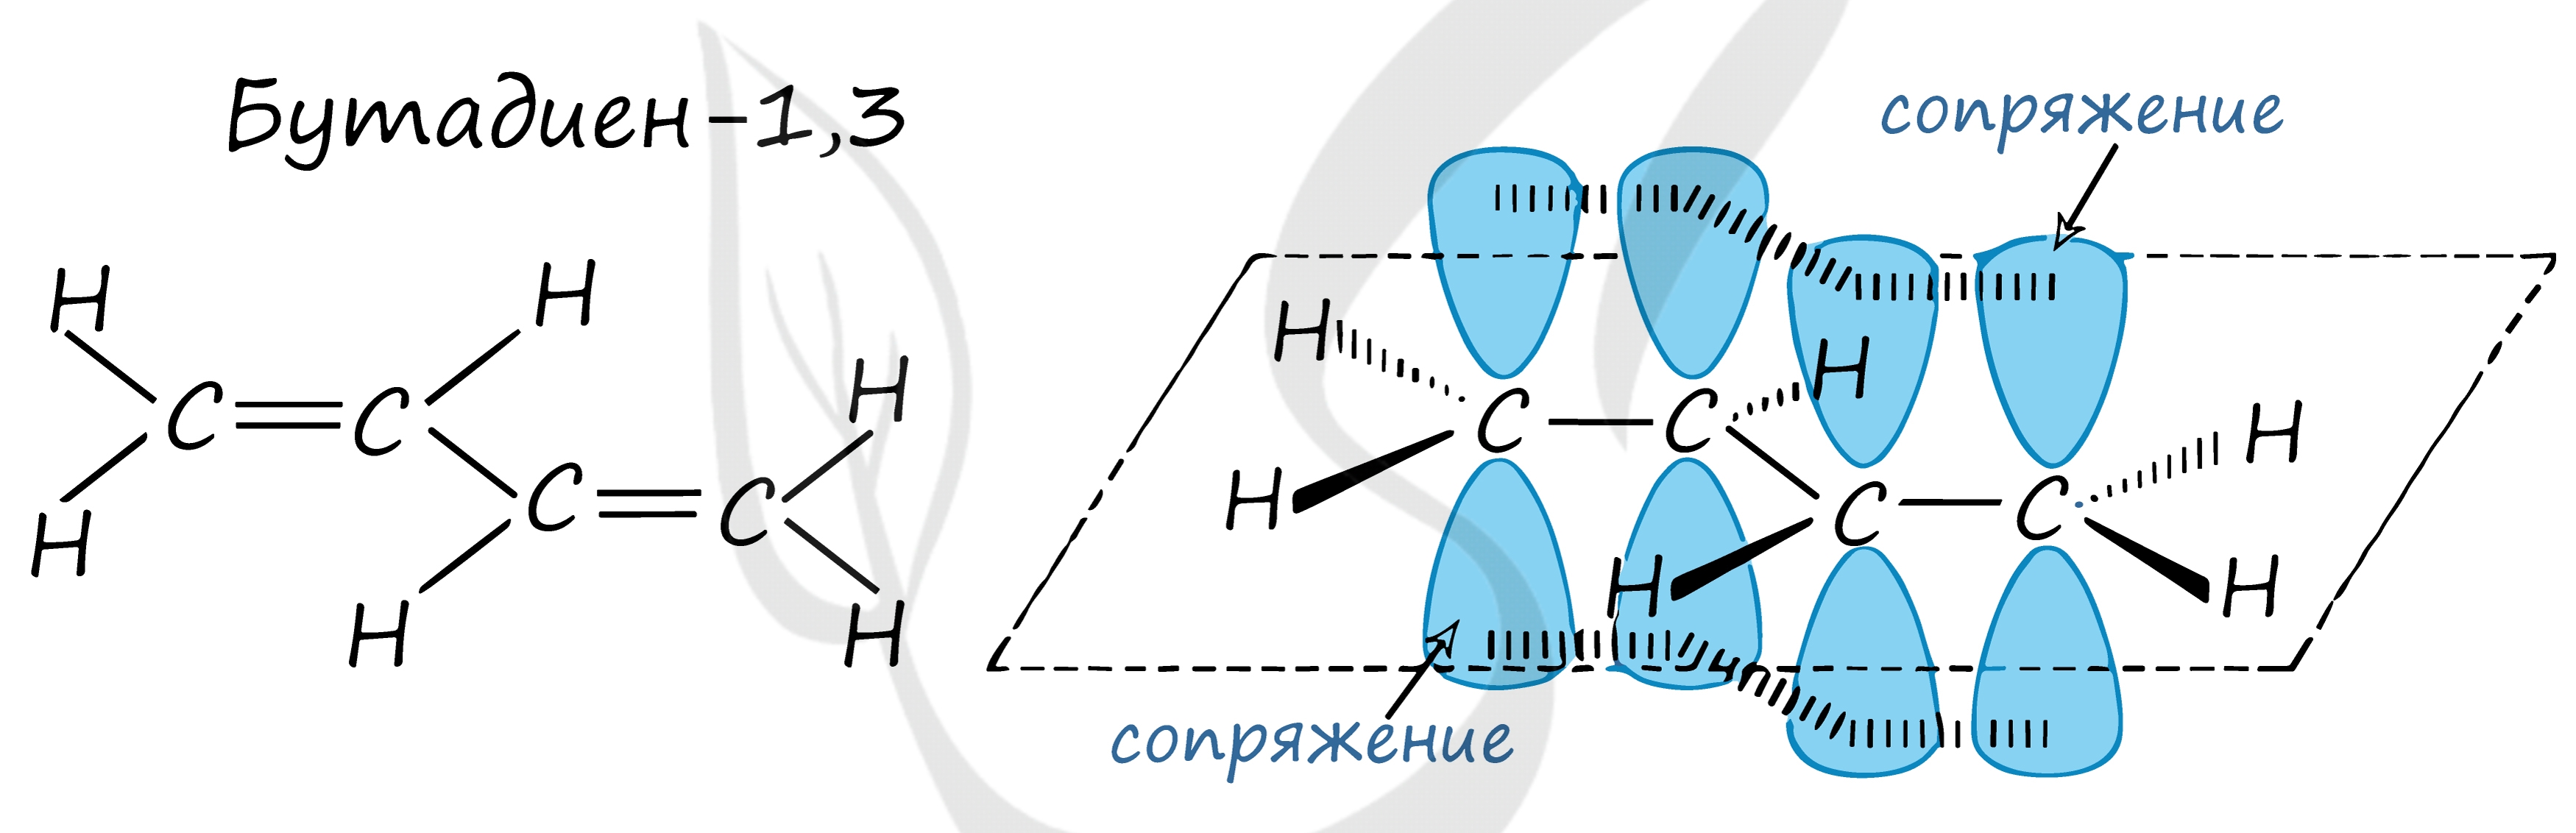 Бутадиен 1 2 гибридизация. Строение молекулы бутадиена 1.3. Электронное строение молекулы бутадиена-1.3. Бутадиен строение молекулы. Схема бутадиена 1.3.